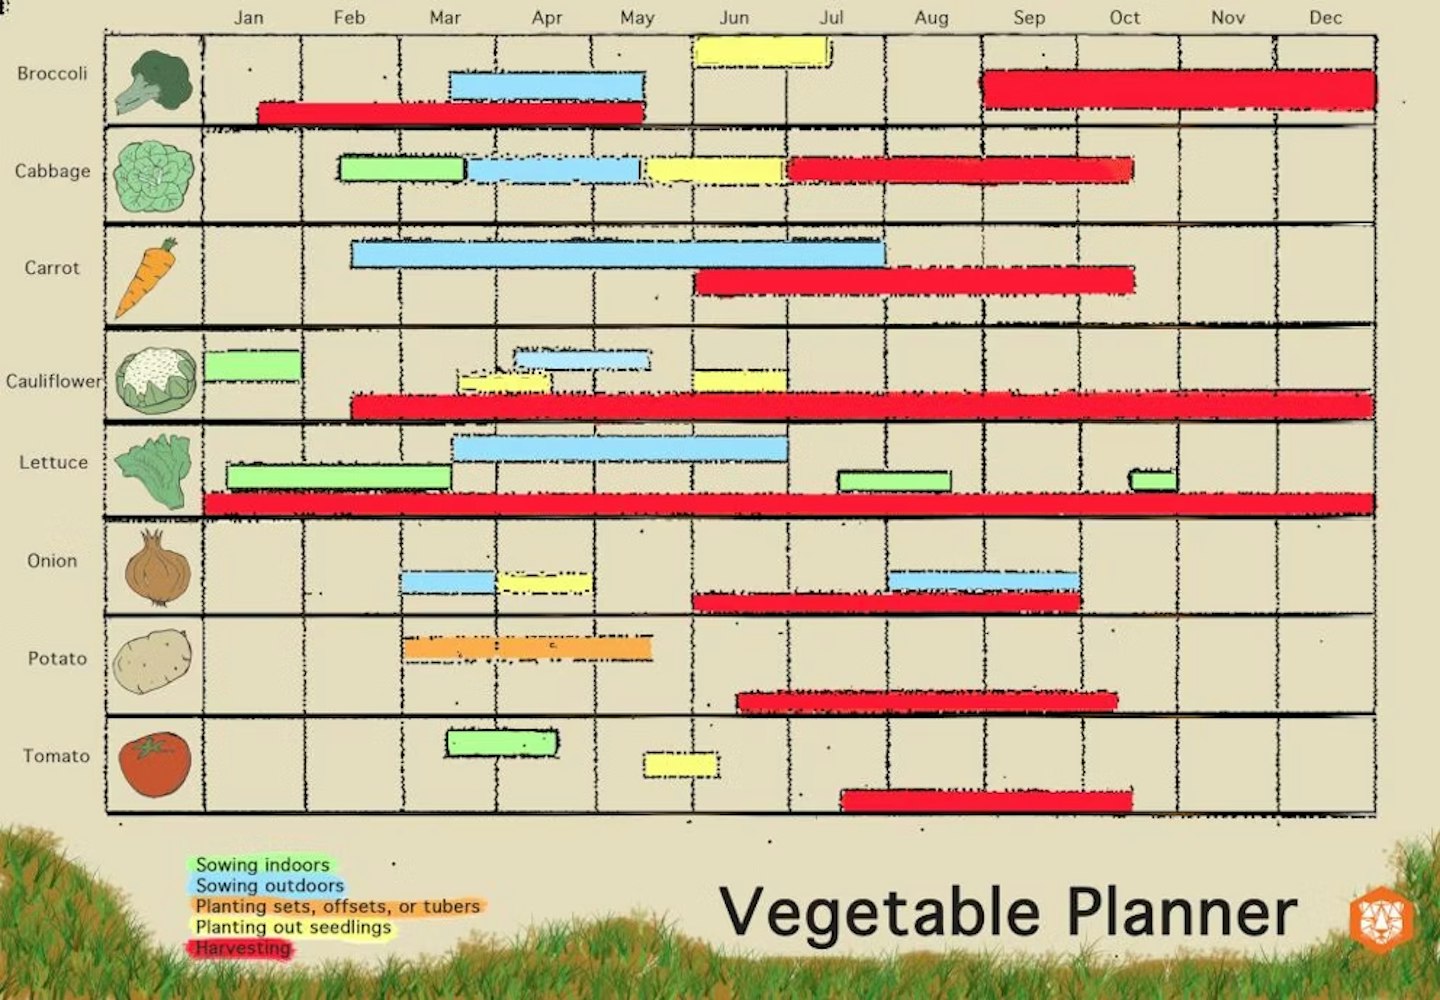 Vegetable planner